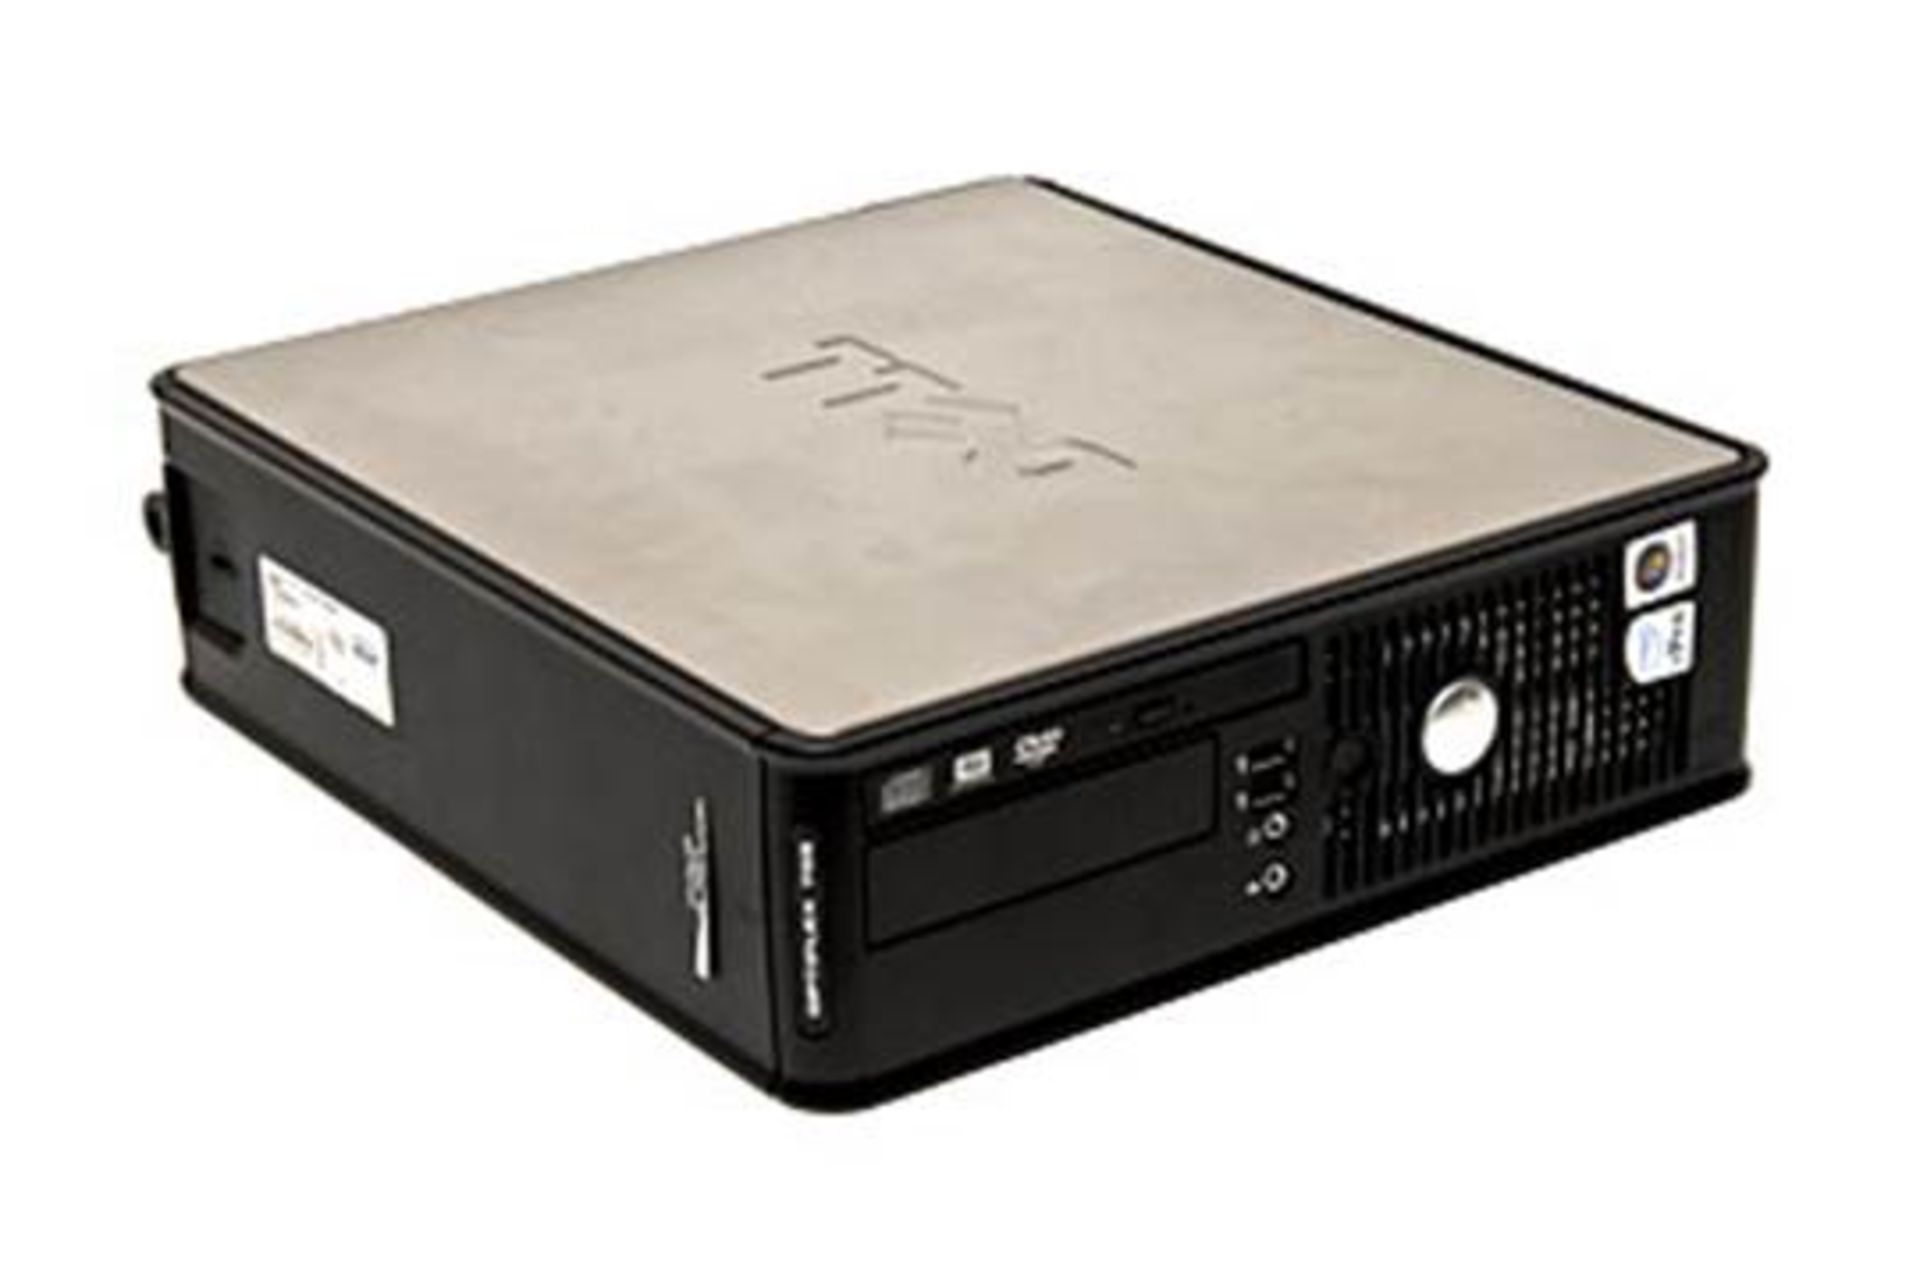 Dell Optiplex 755 Pentium Dual 2.2Ghz 2Gb Ram DVD/CD-Rom USFF PC - No HDD - With PSU